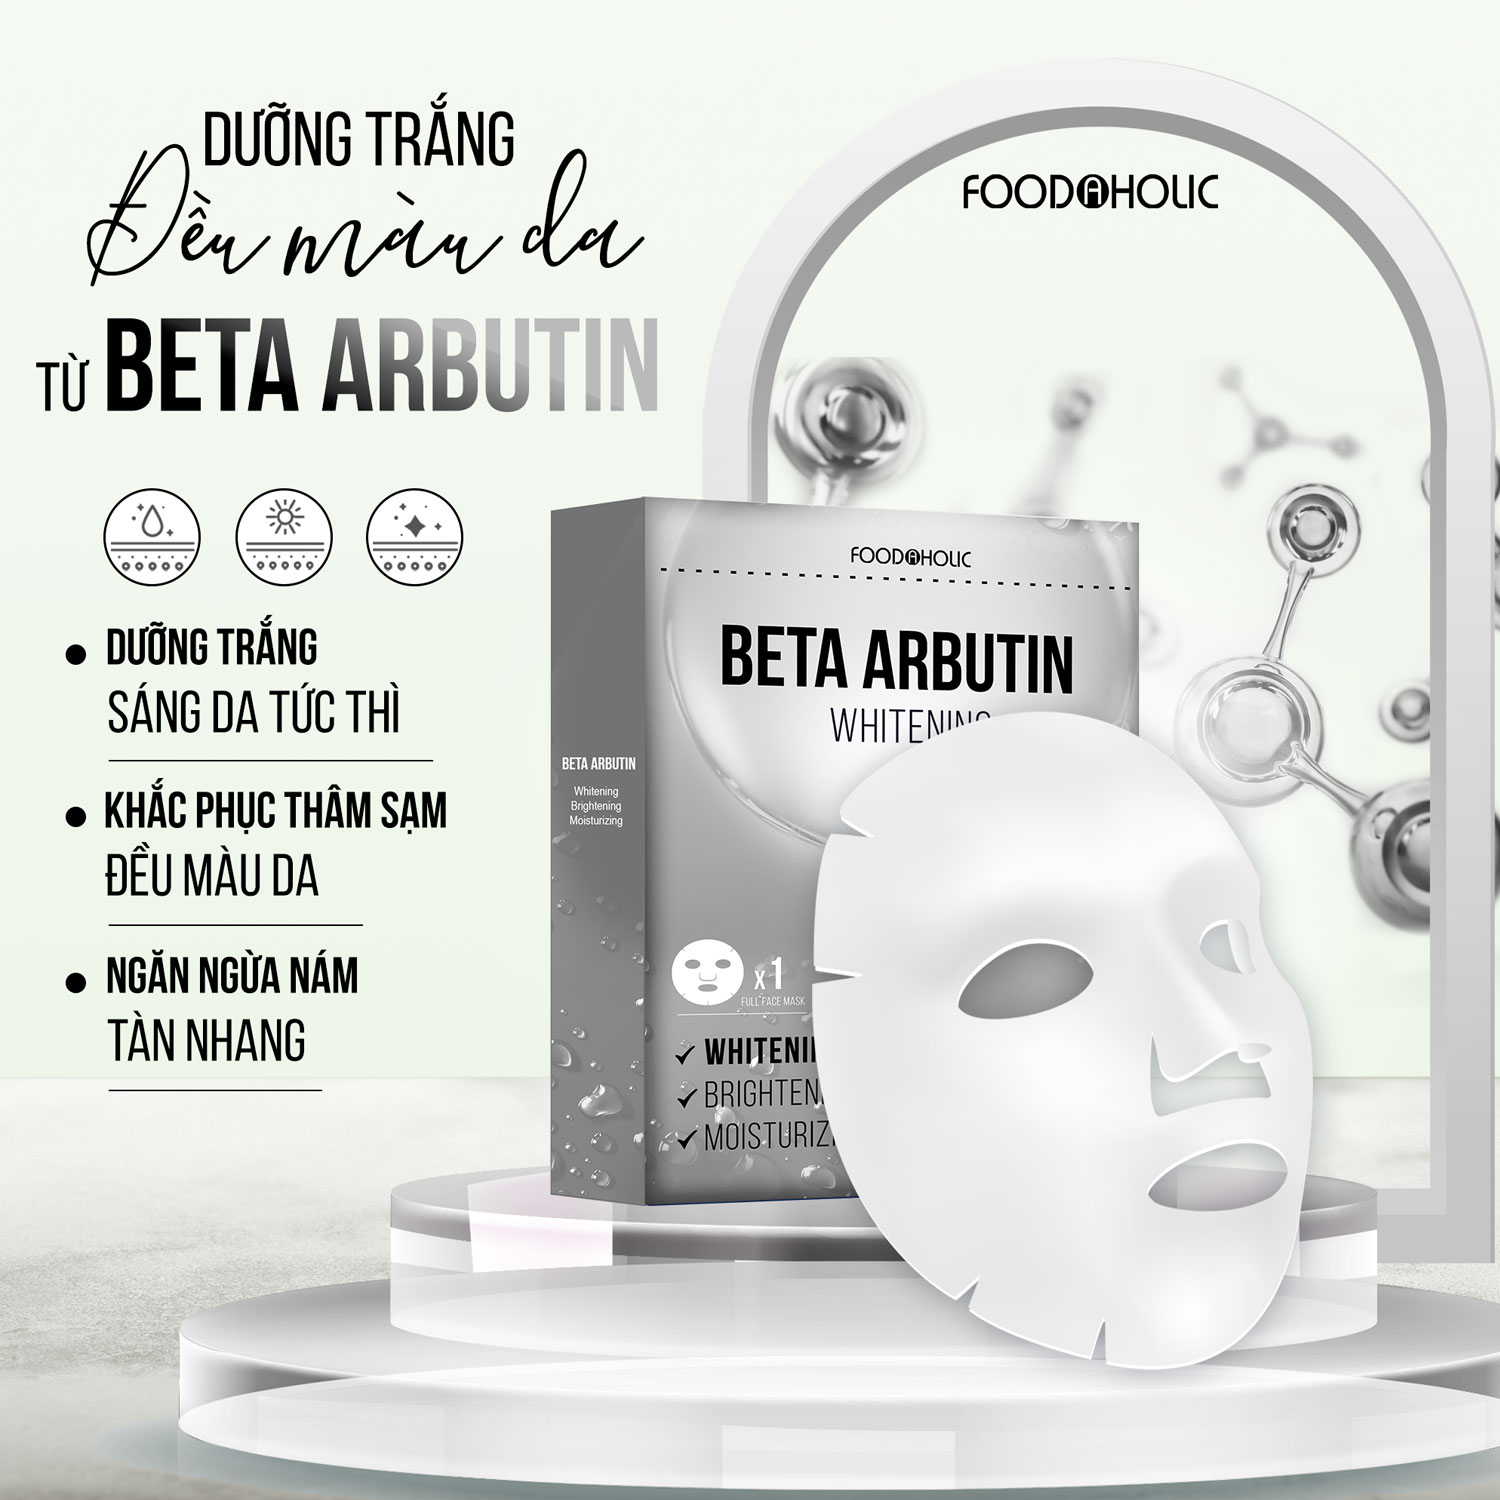 Foodaholic Beta Arbutin Whitening Mask 23ml